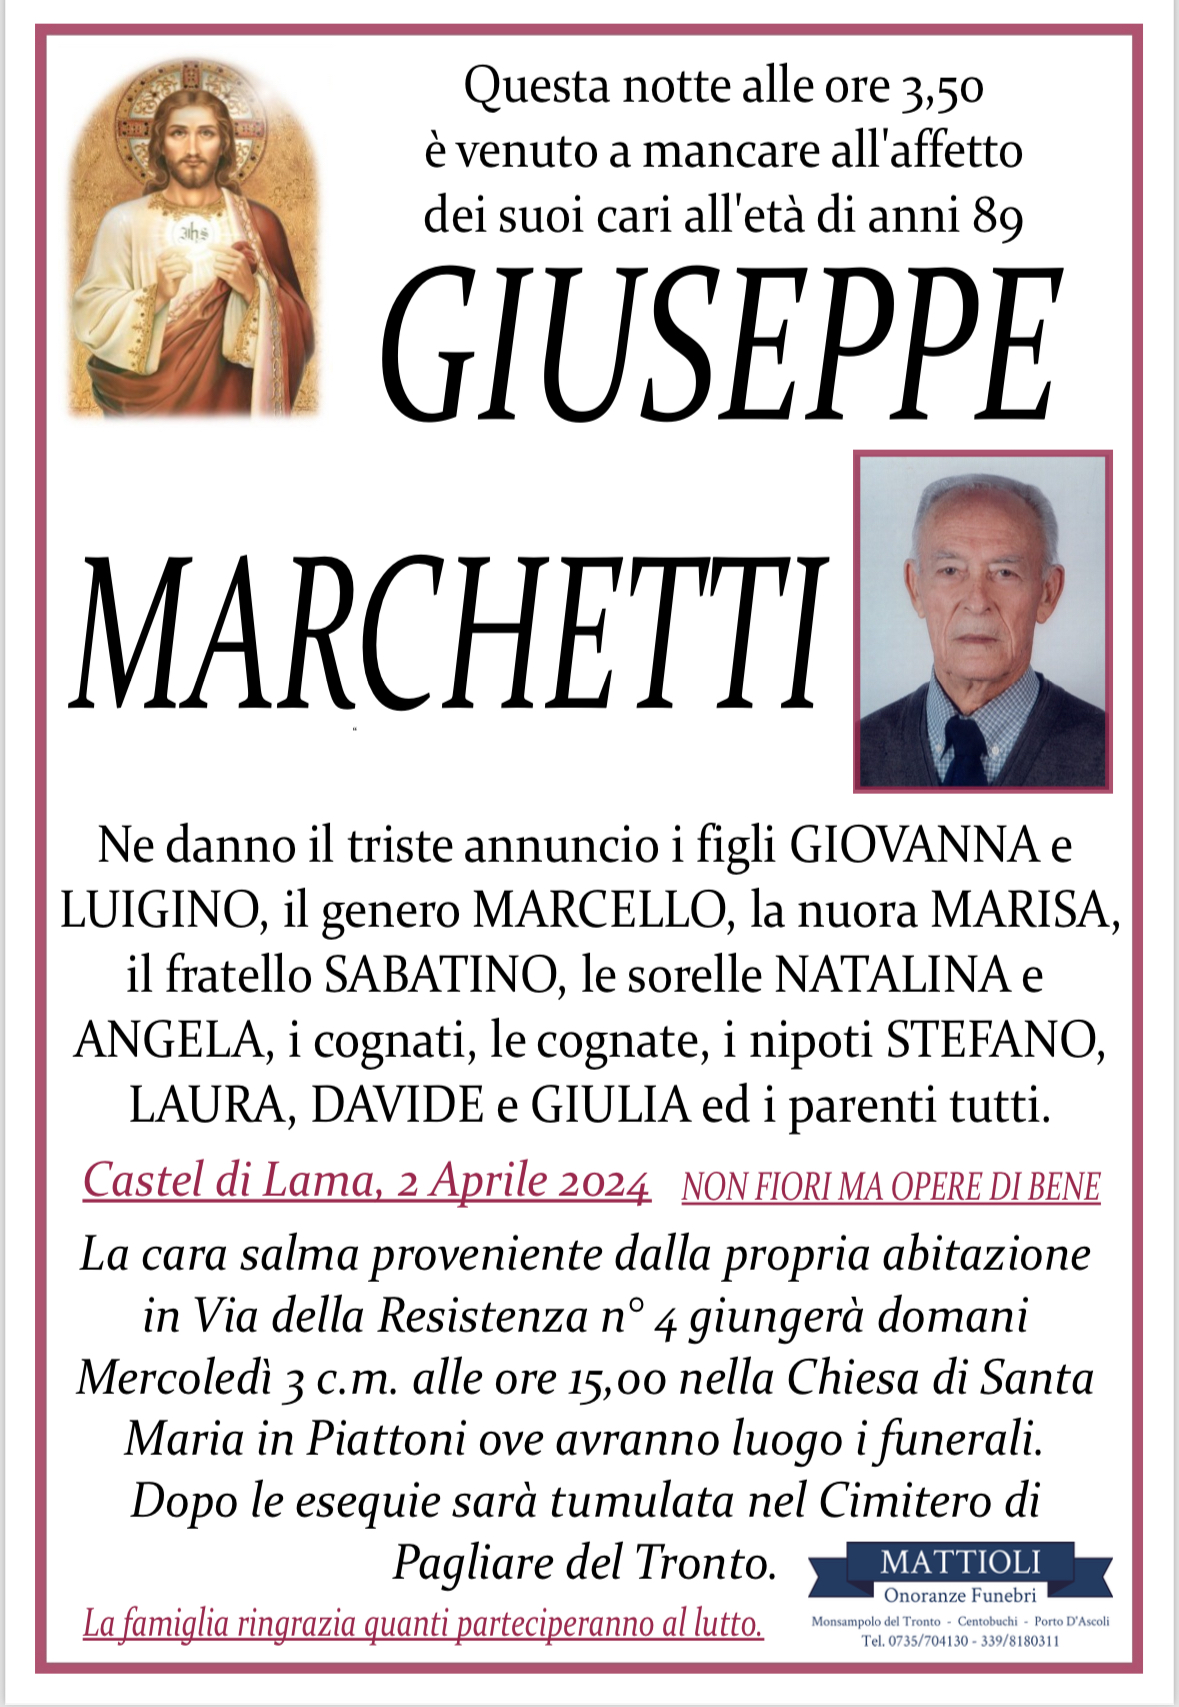 Giuseppe Marchetti